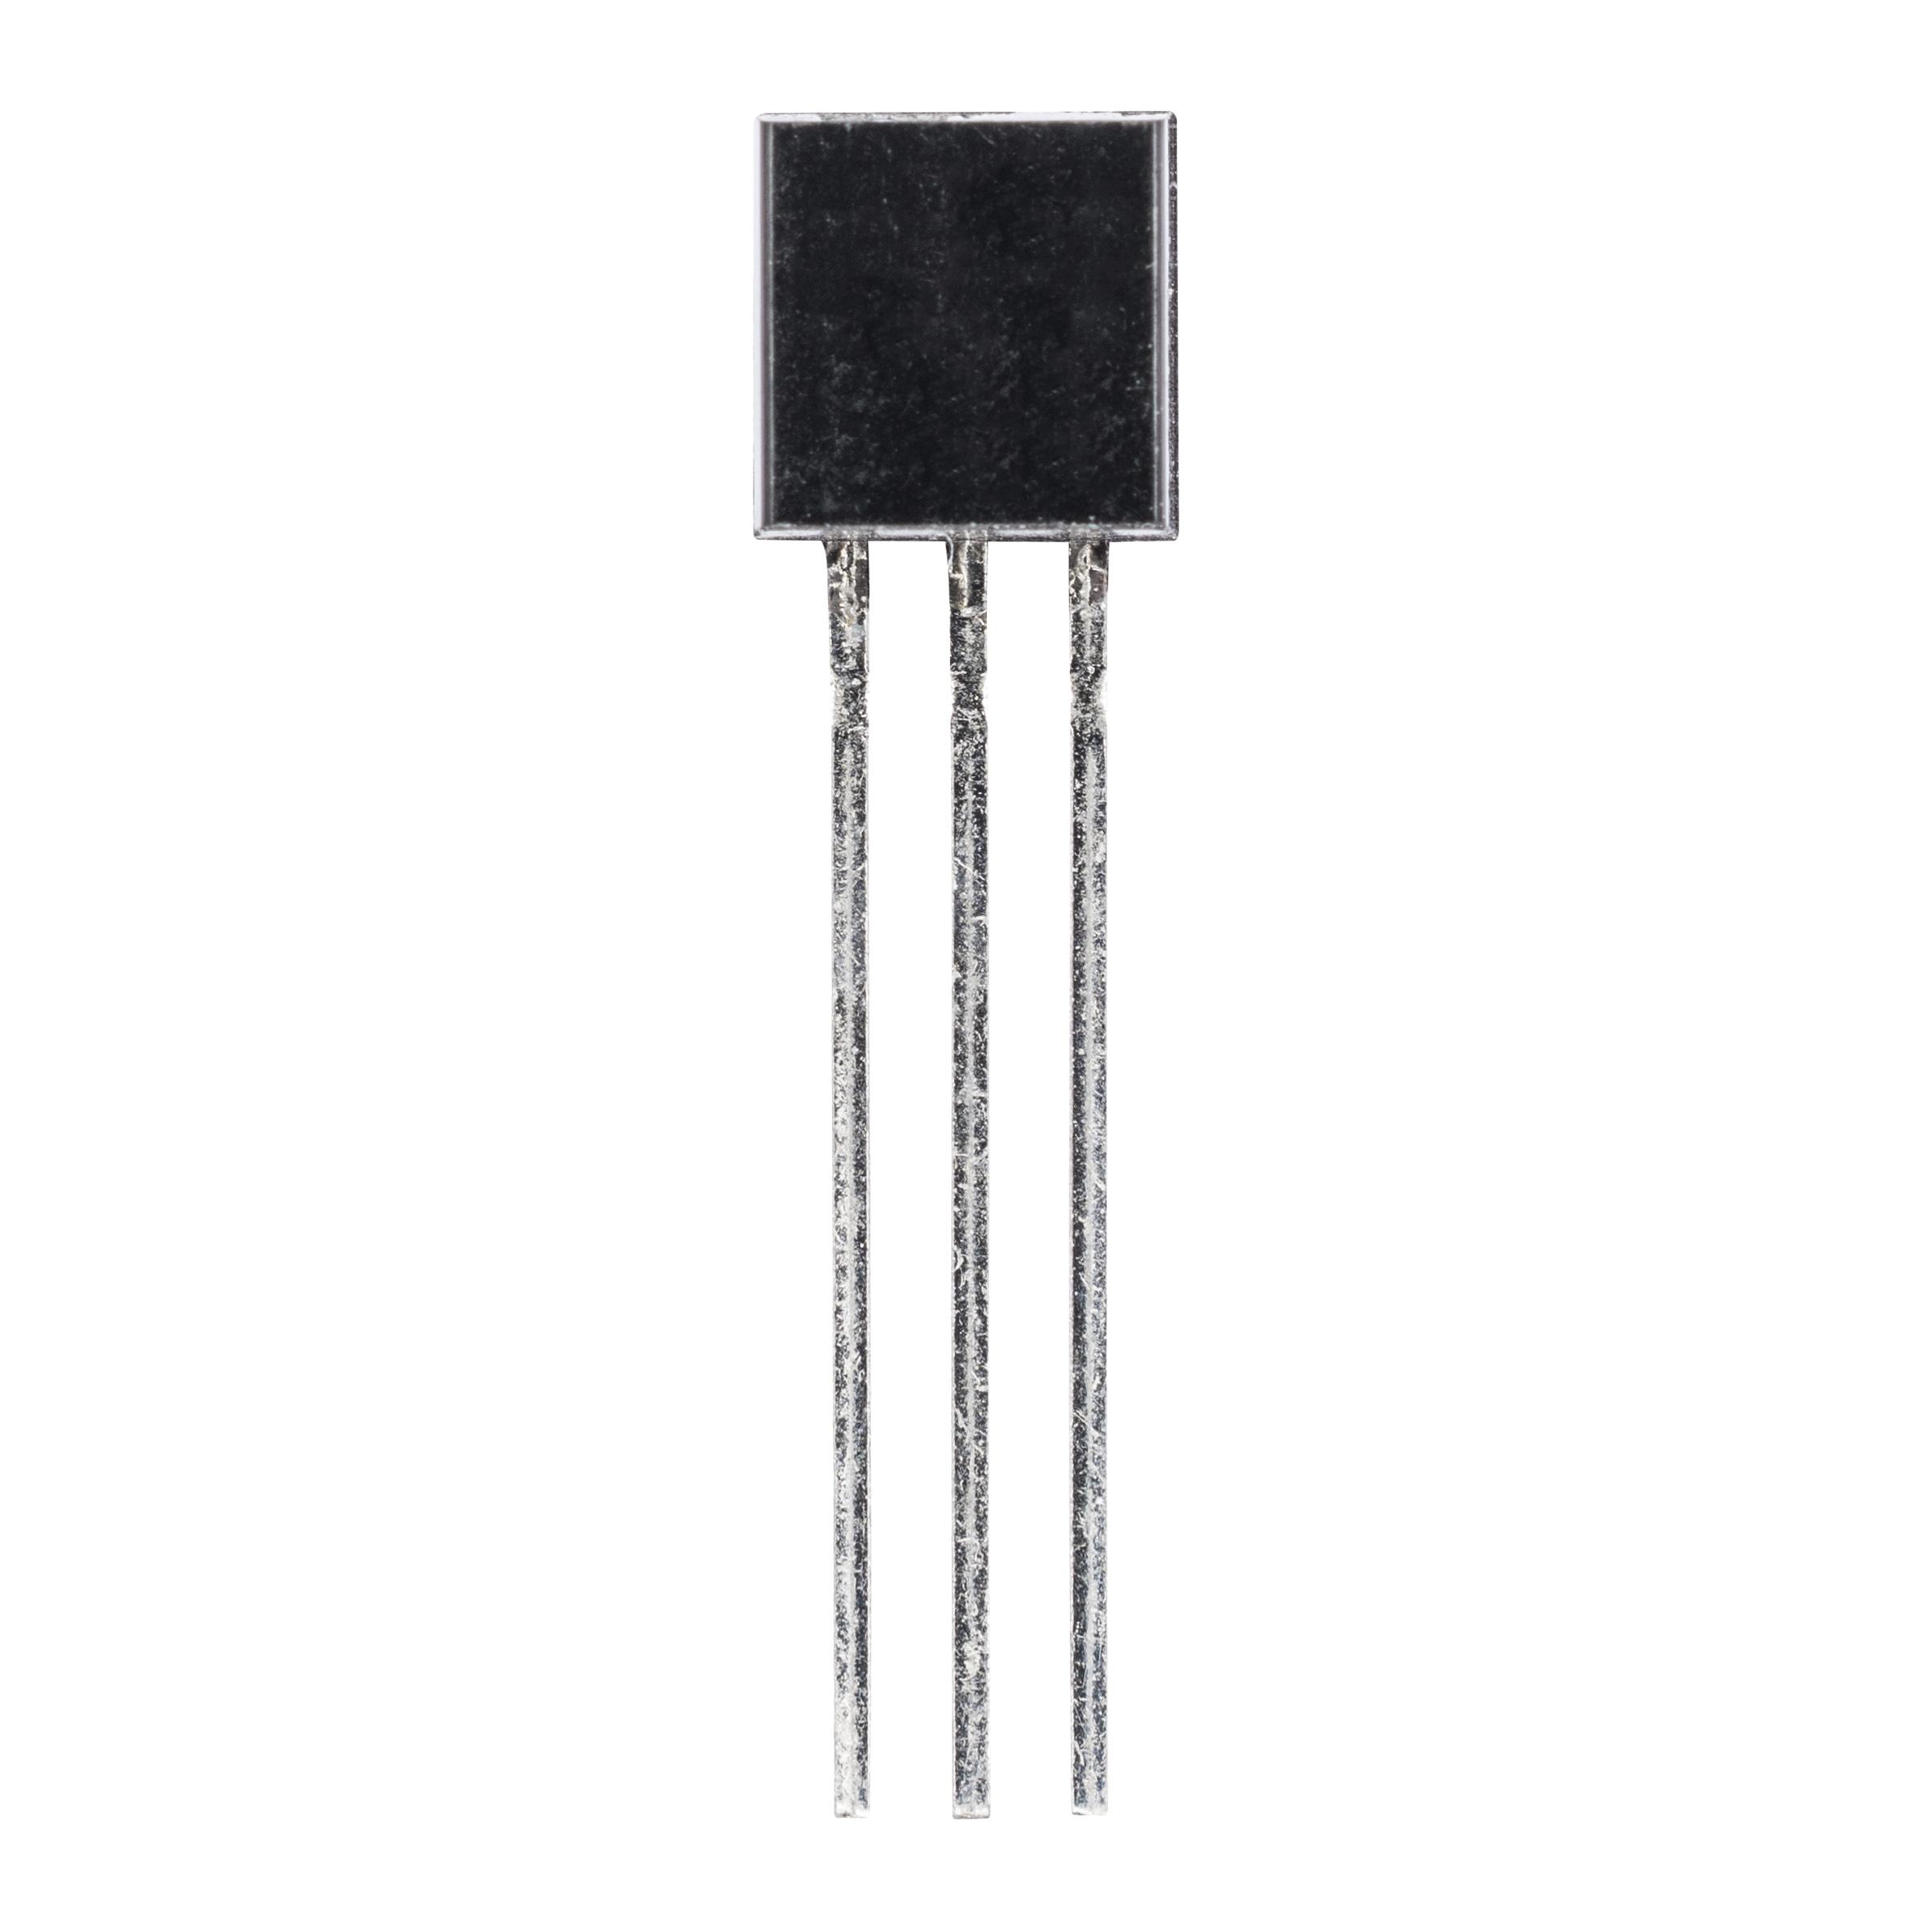 2N4401 (Bipolartransistor NPN)